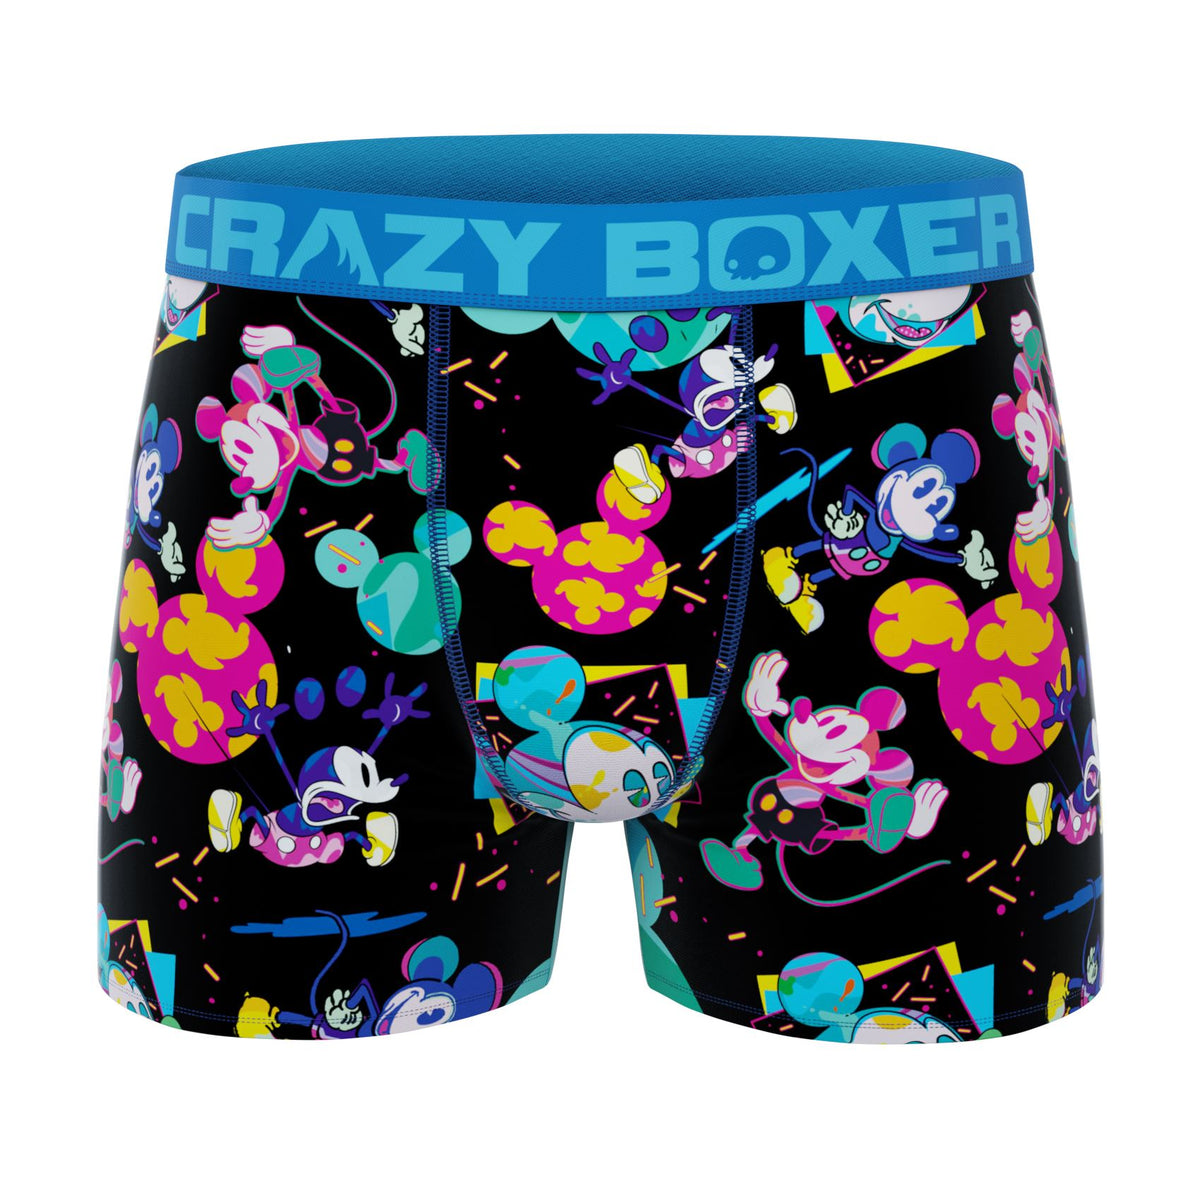 CRAZYBOXER Disney Mickey Classic Men's Boxer Briefs (2 pack